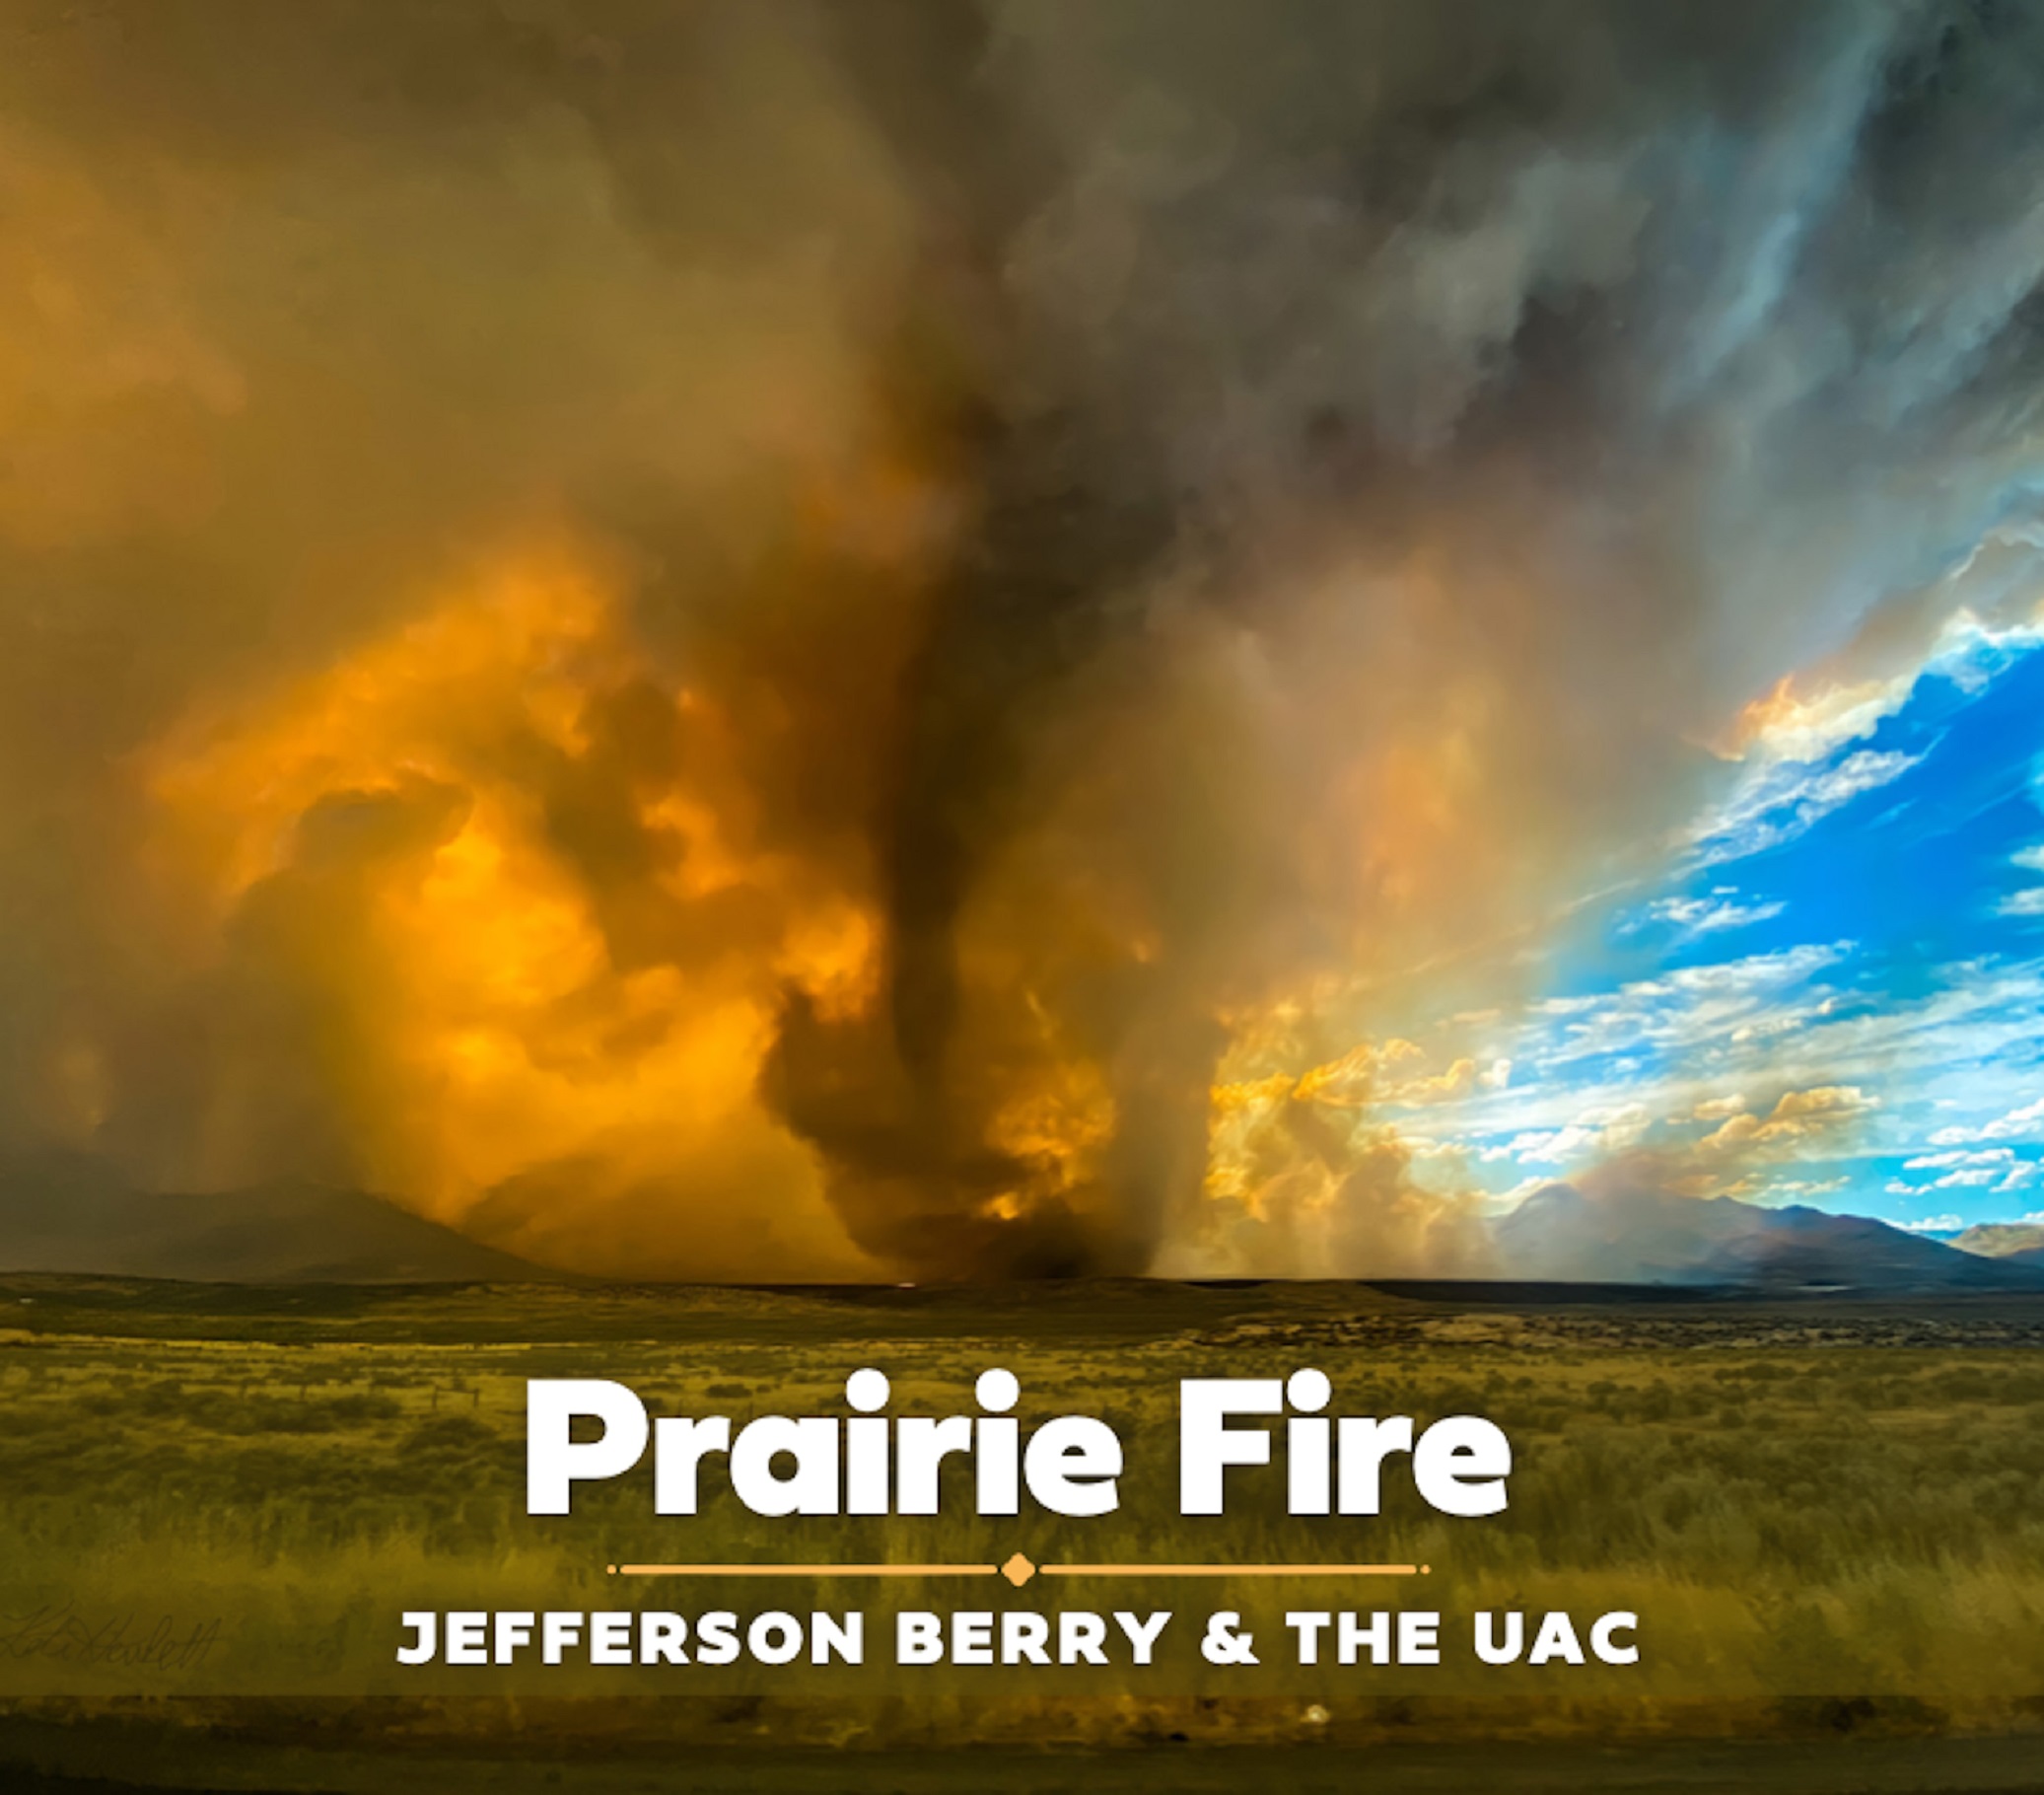 Jefferson Berry & the UAC Release "Prairie Fire" 6/9 | CA Tour in June